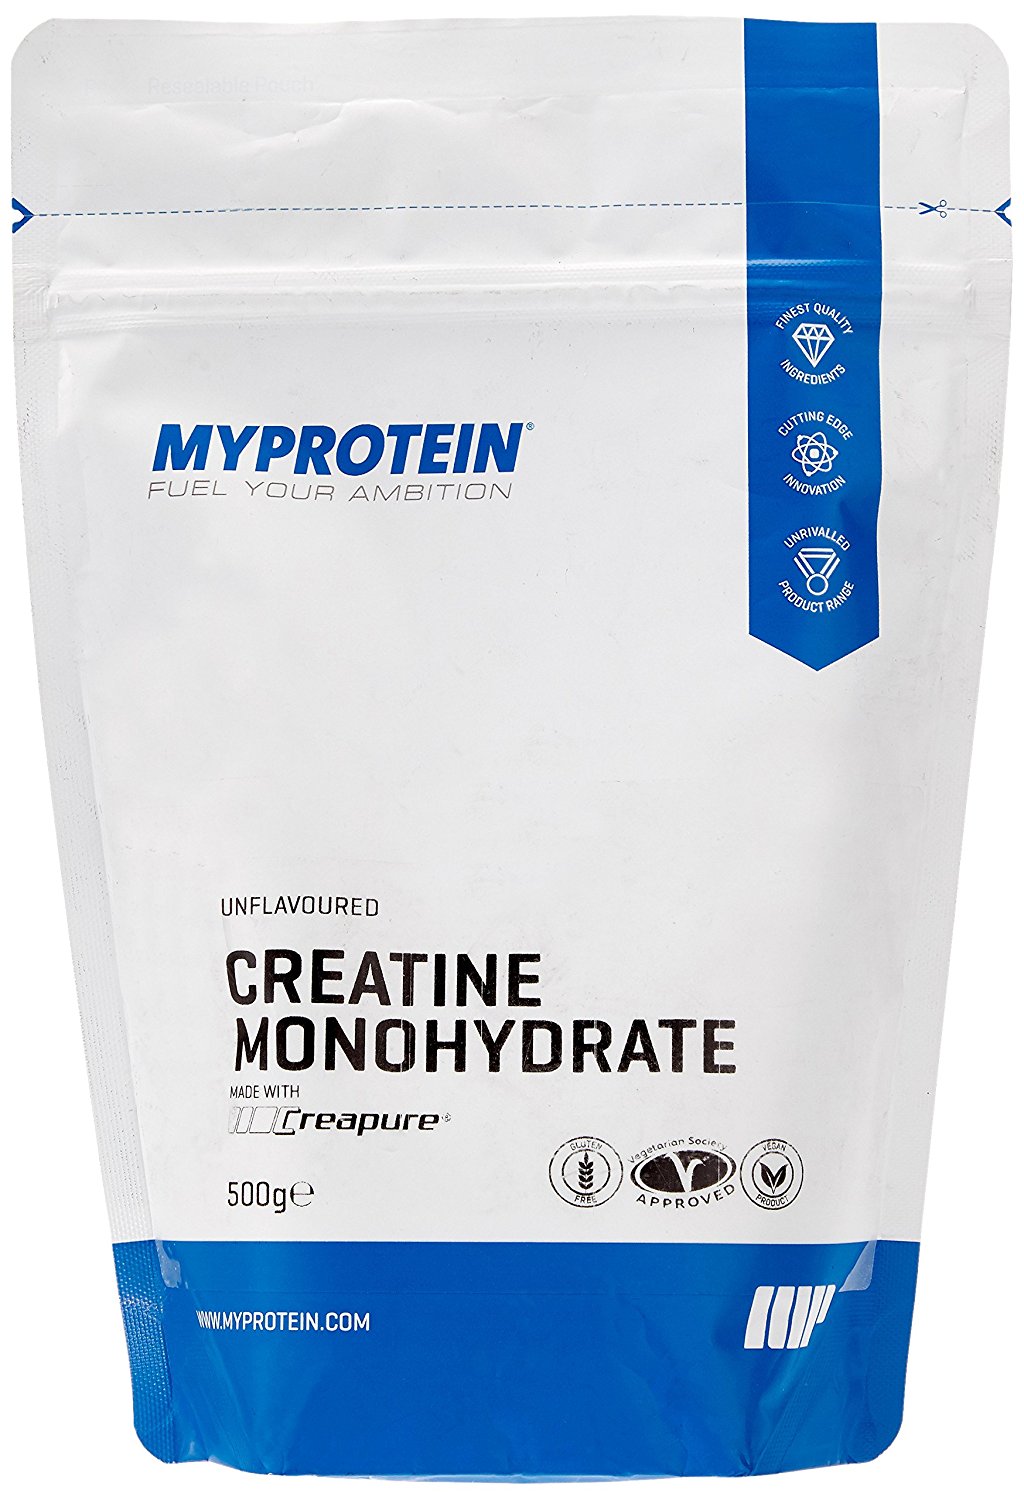 Myprotein Creapure Creatine Monohydrate